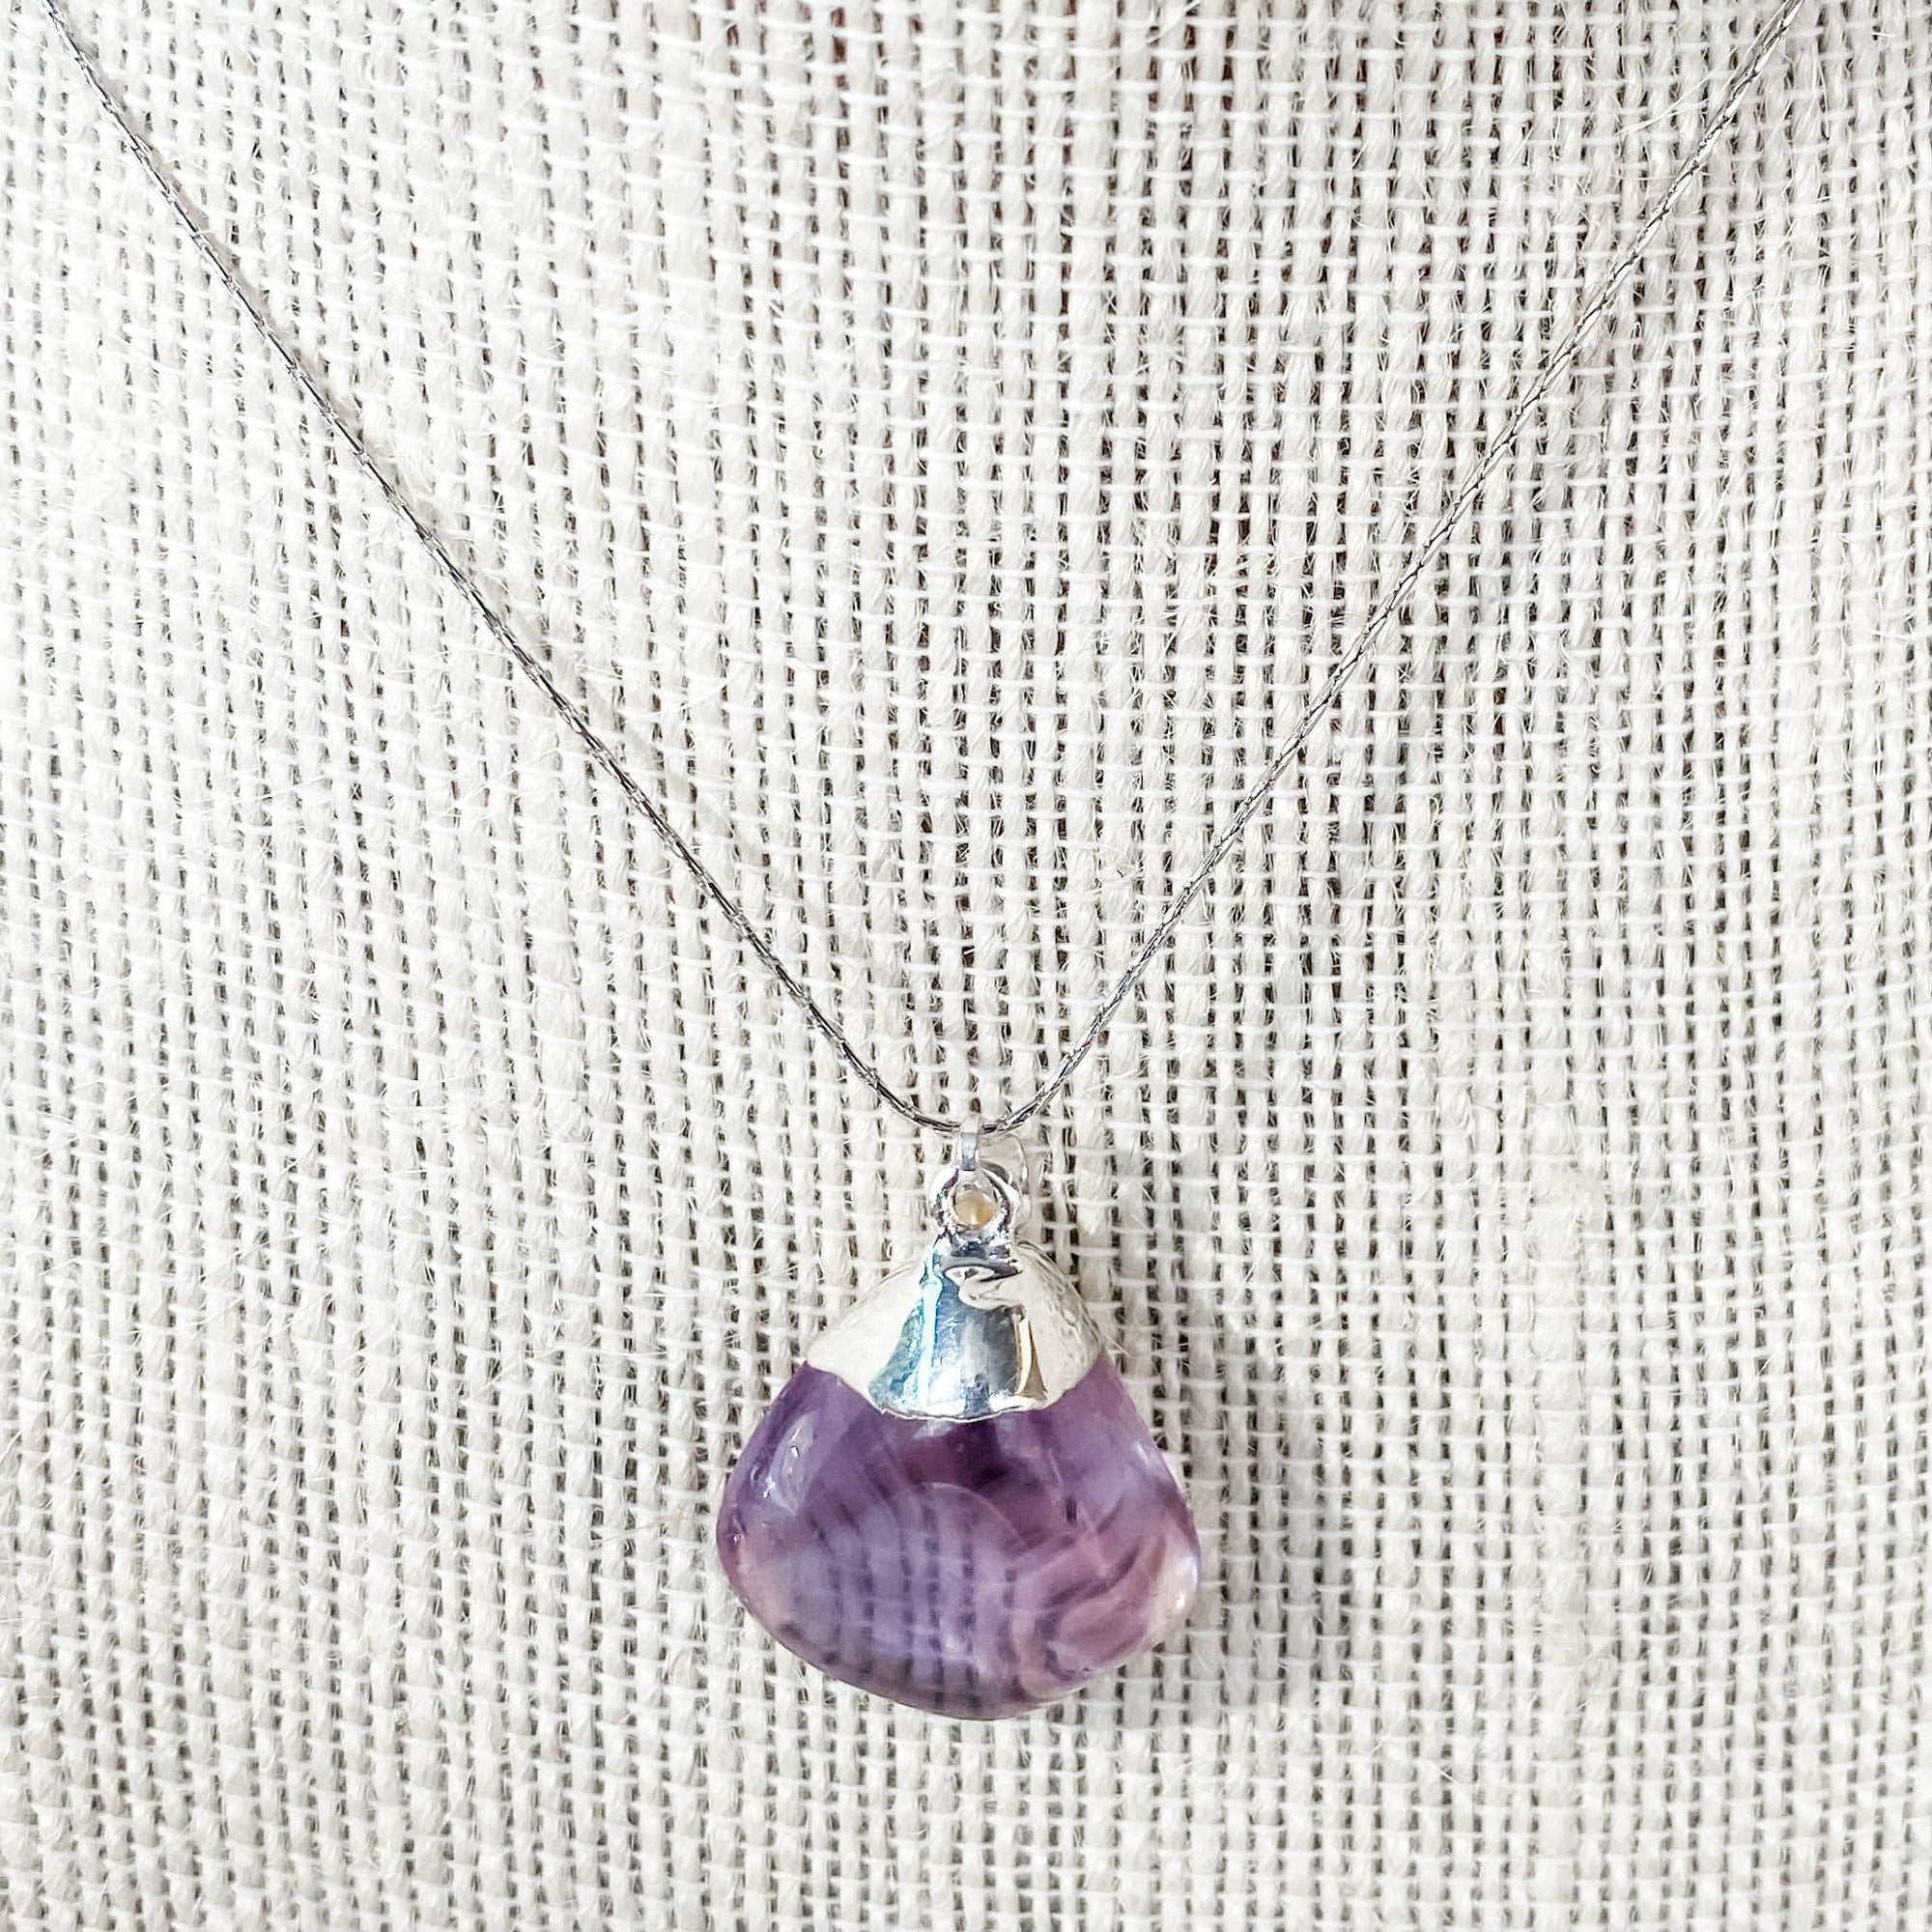 s1016 Amethyst crystal tumbled stone tear drop pendant silver necklace crystals australia gemrox 1